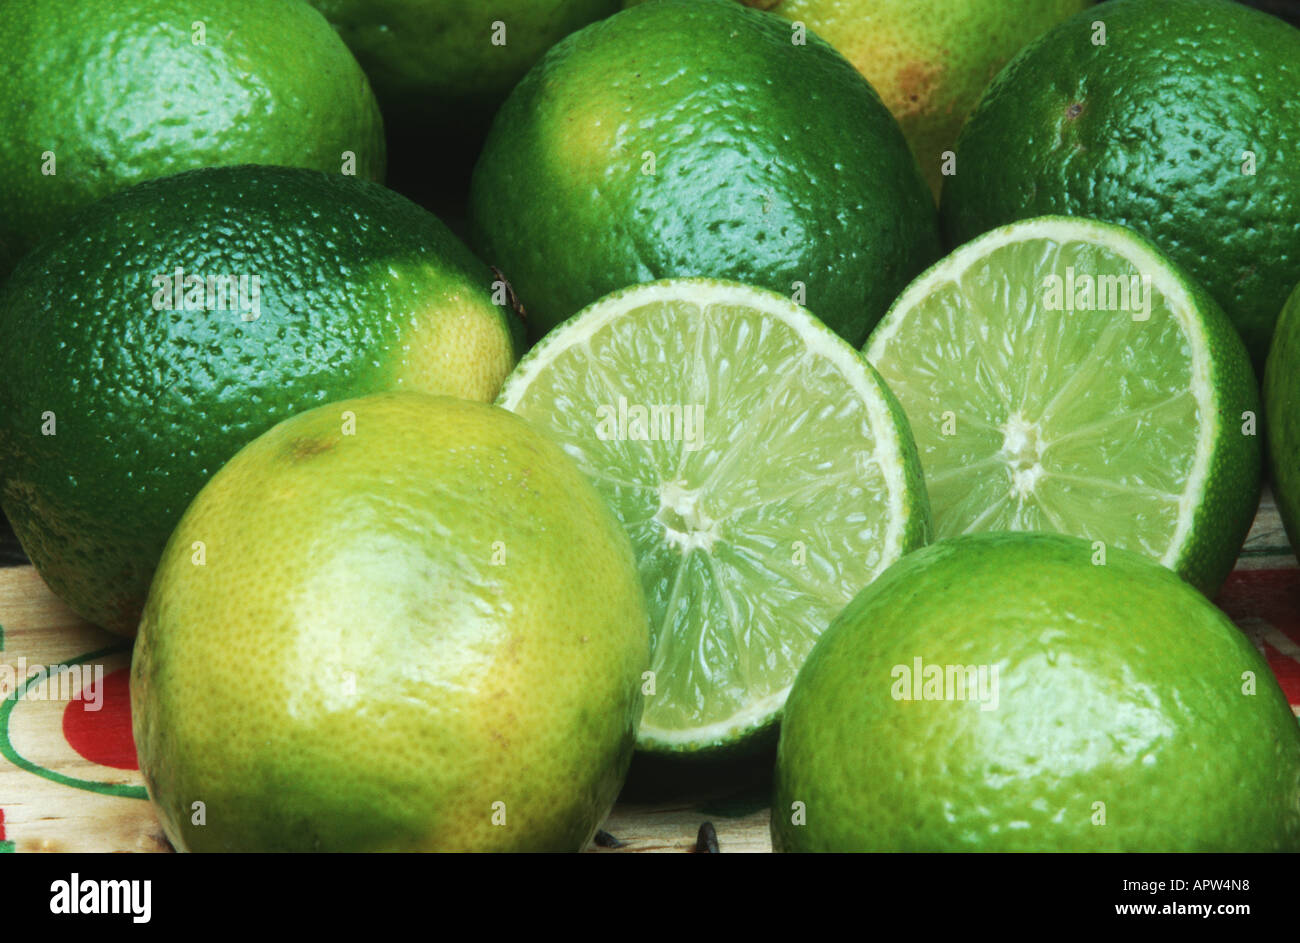 sweet limetta, Mediterranean sweet lemon, sweet lemon, sweet lime, pear lemon (Citrus limetta), fruits, cutted into halves Stock Photo